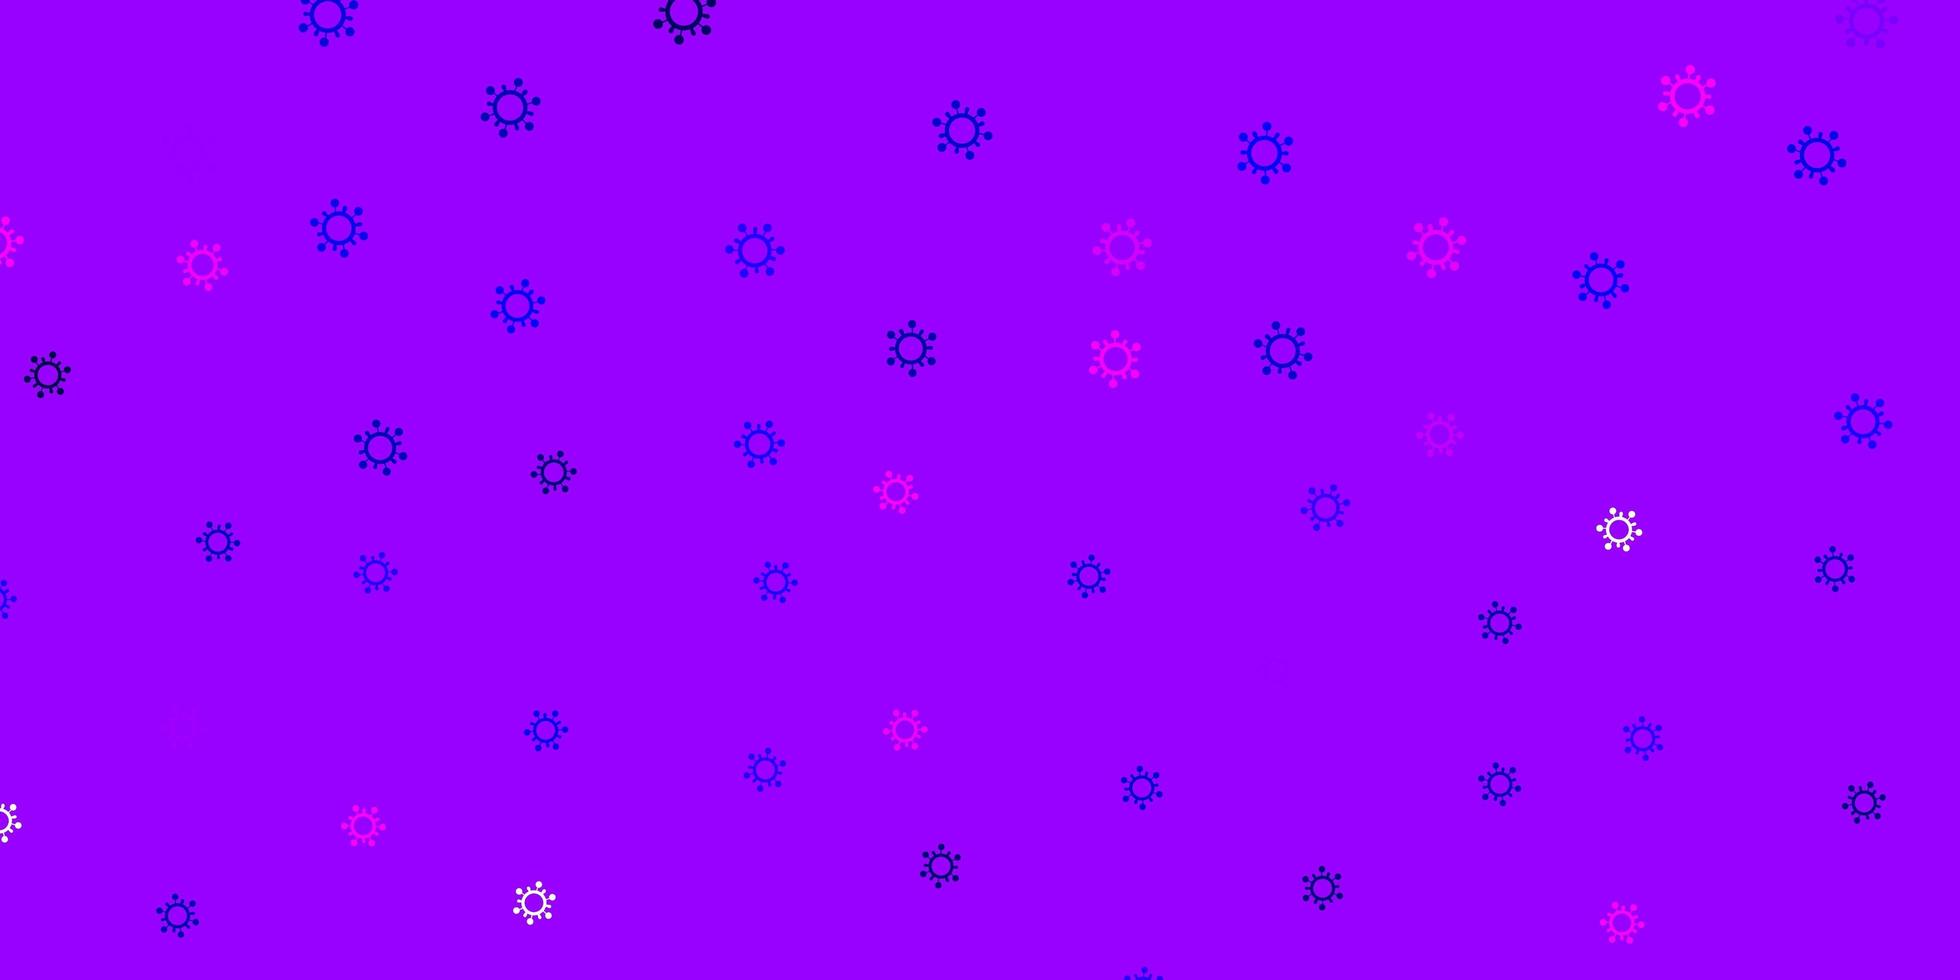 Light purple, pink vector backdrop with virus symbols.